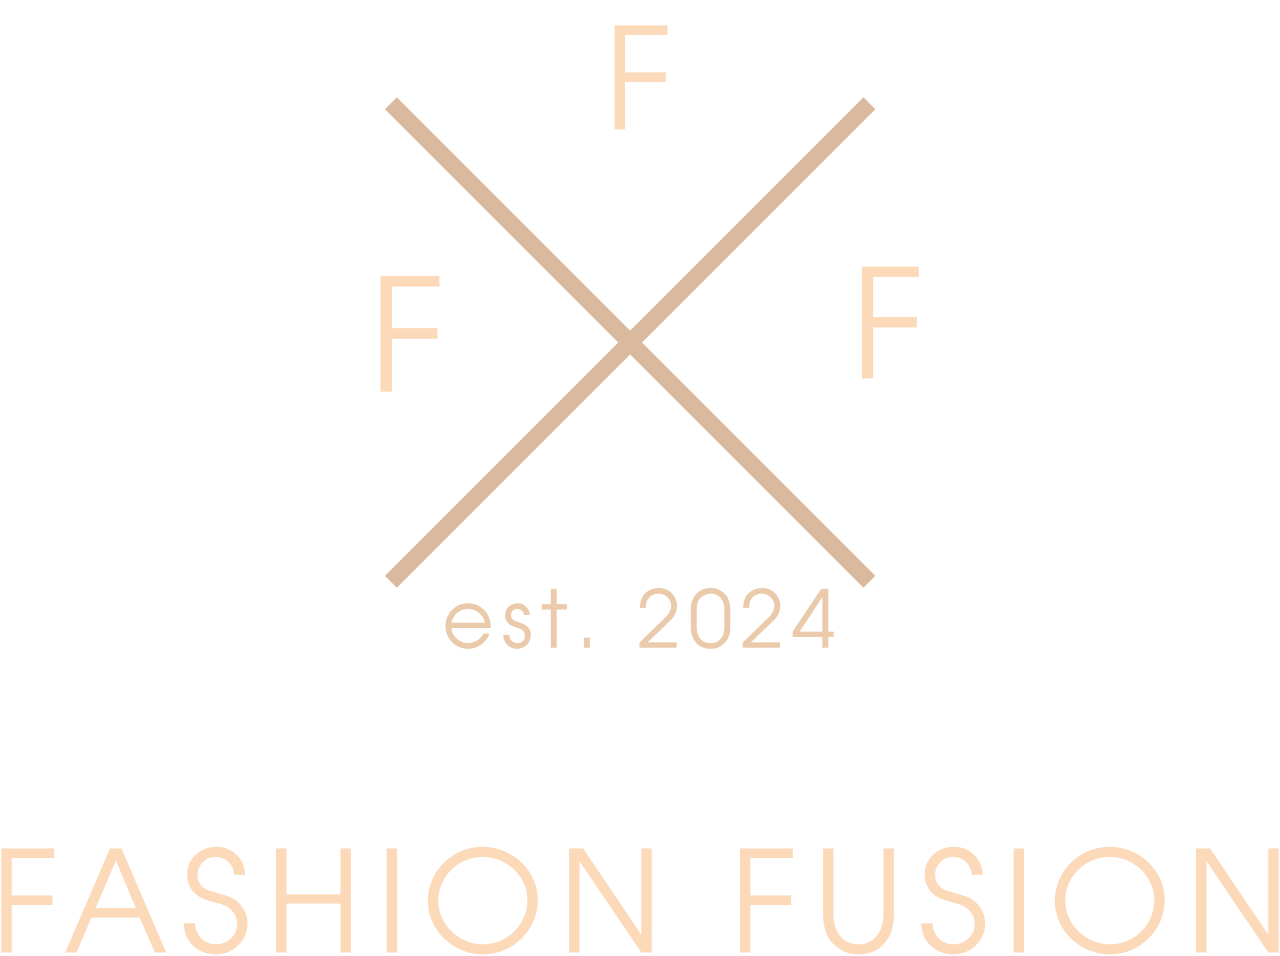 Fashion Fusion's logo